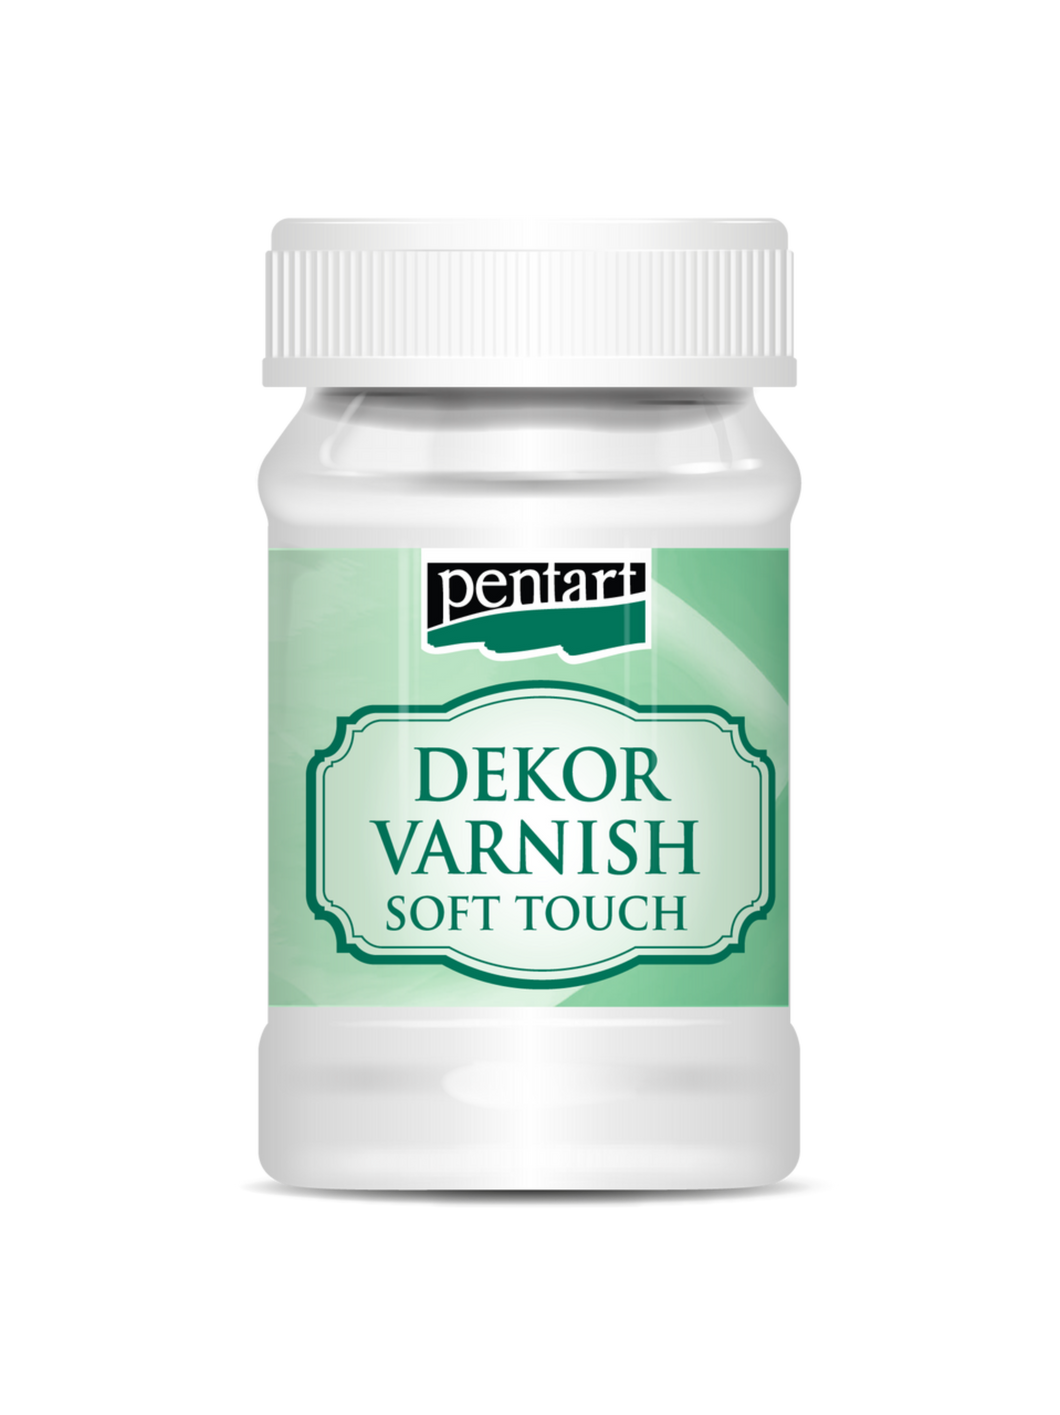 Pentart Dekor Varnish Soft Touch